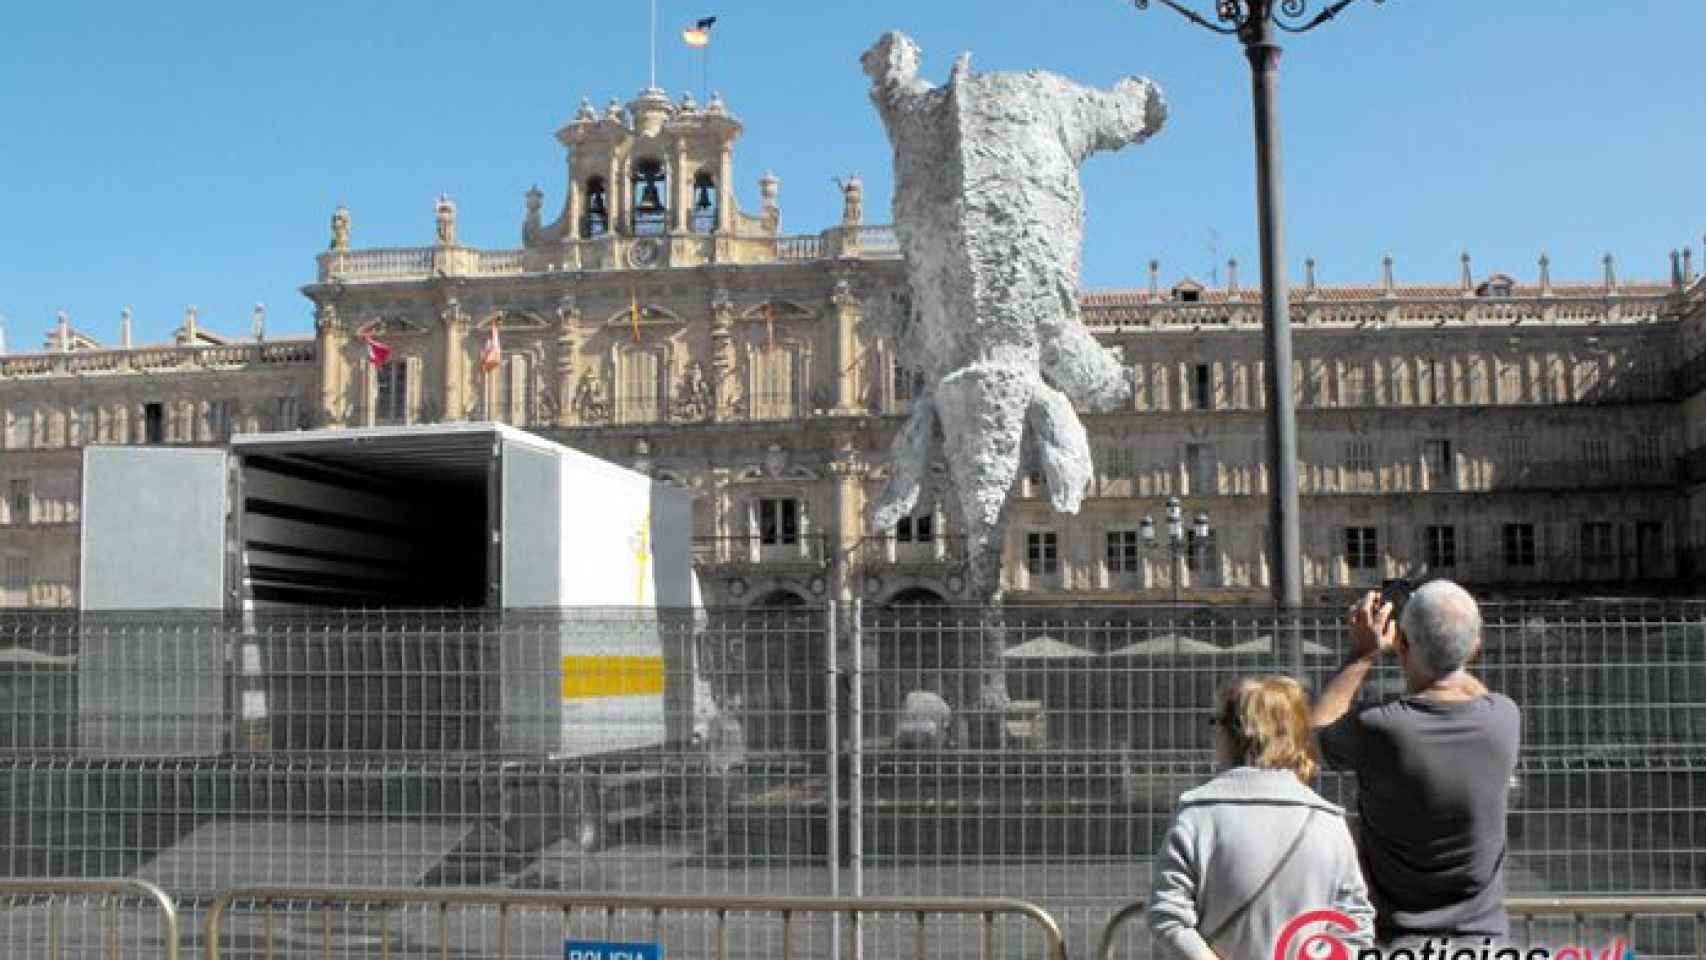 elefante-barcelo-elefant-dret-plaza-mayor-salamanca-arca-de-noe-retirada-ferias-fiestas-2017-escultura-bronce-monumental-autorretrato